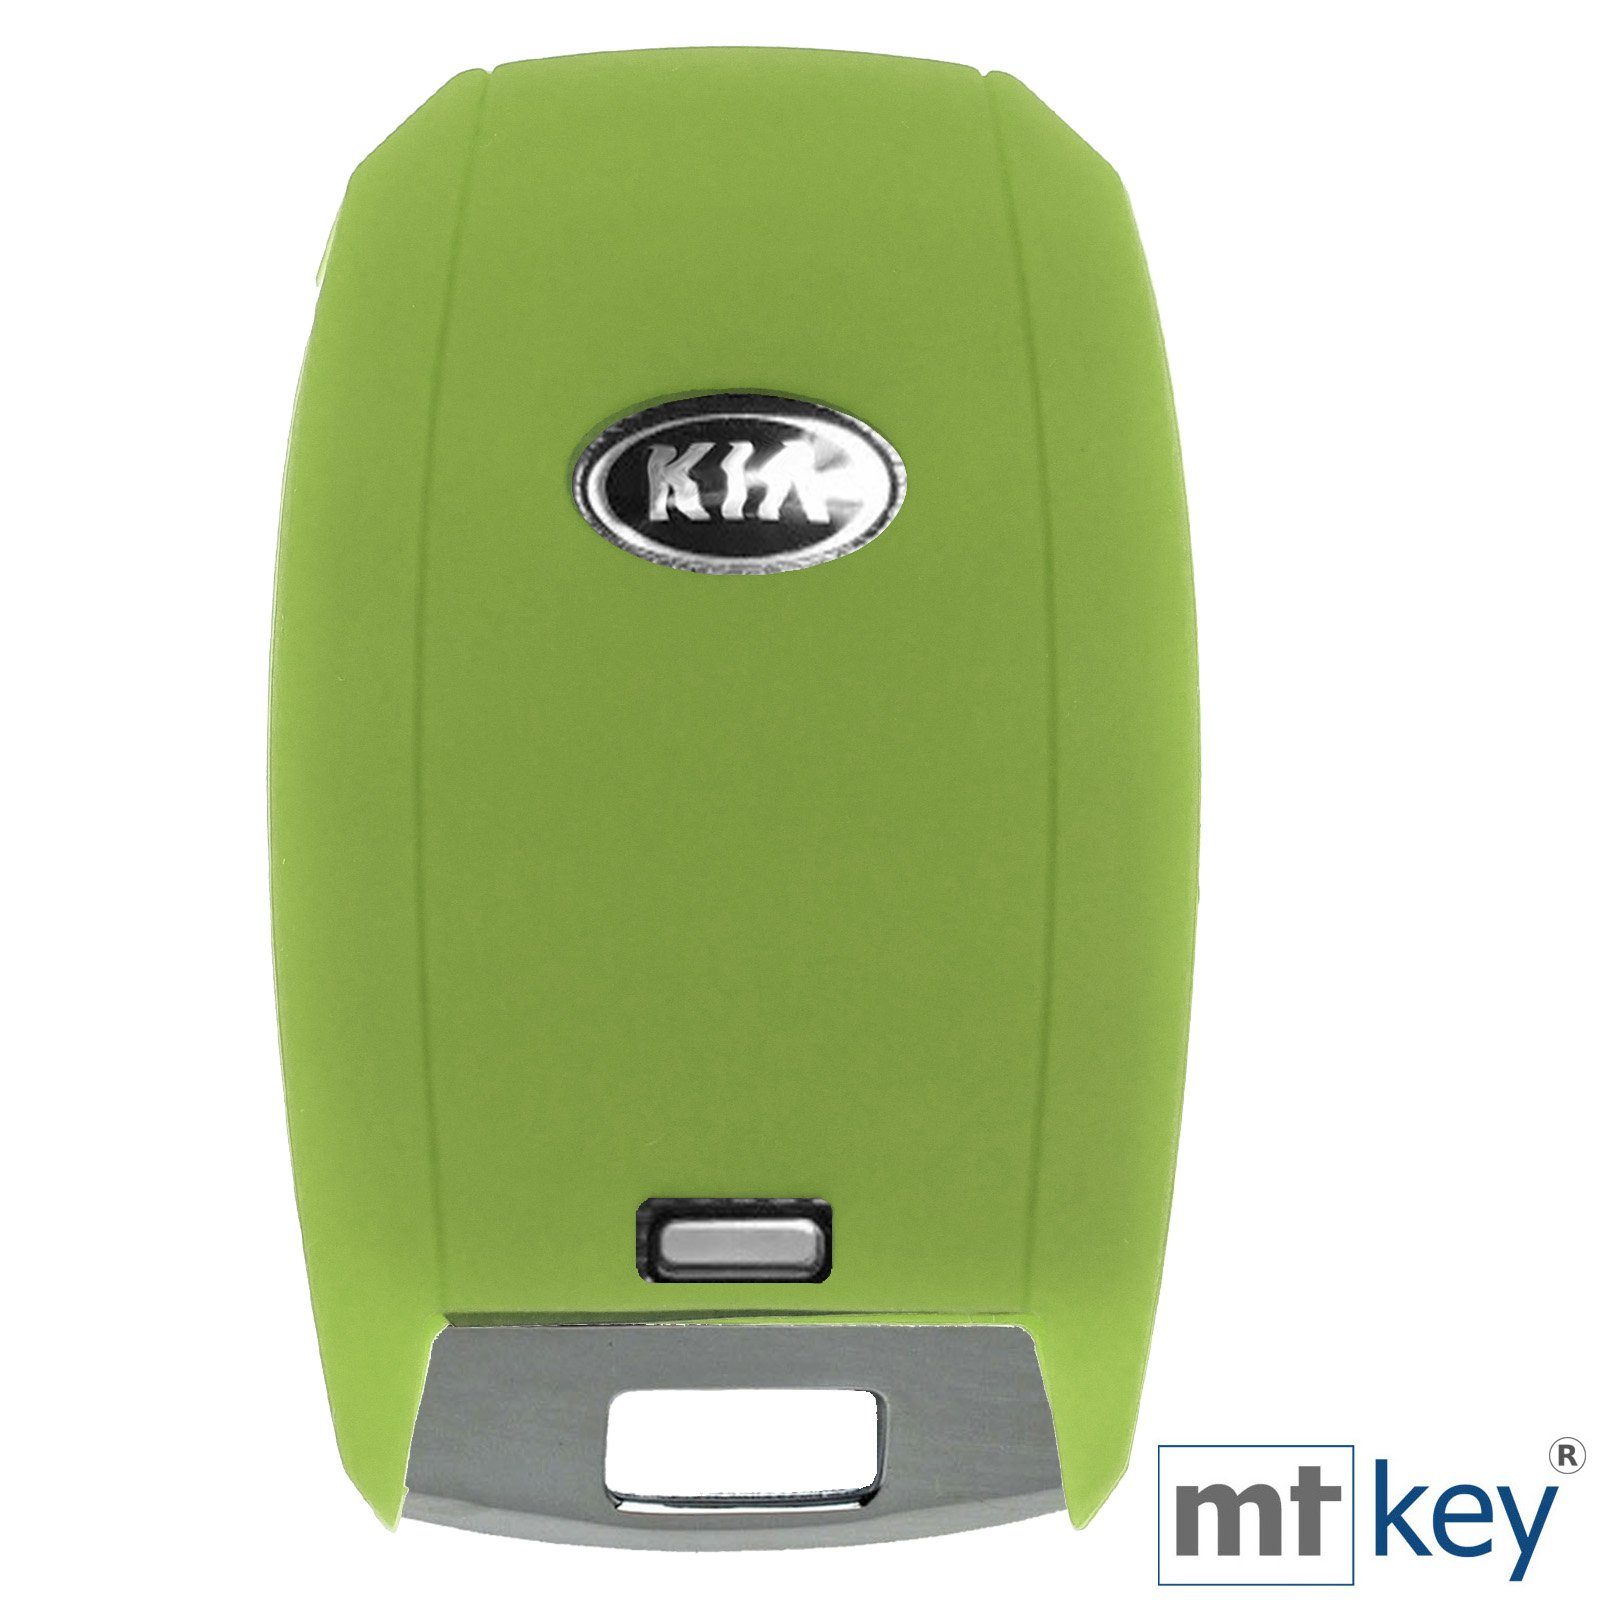 mt-key Schlüsseltasche Autoschlüssel Silikon Schutzhülle Tasten fluoreszierend für KIA KEYLESS Ceed Schlüsselband, Rio Stonic Picantio + Grün Sportage 3 Soul